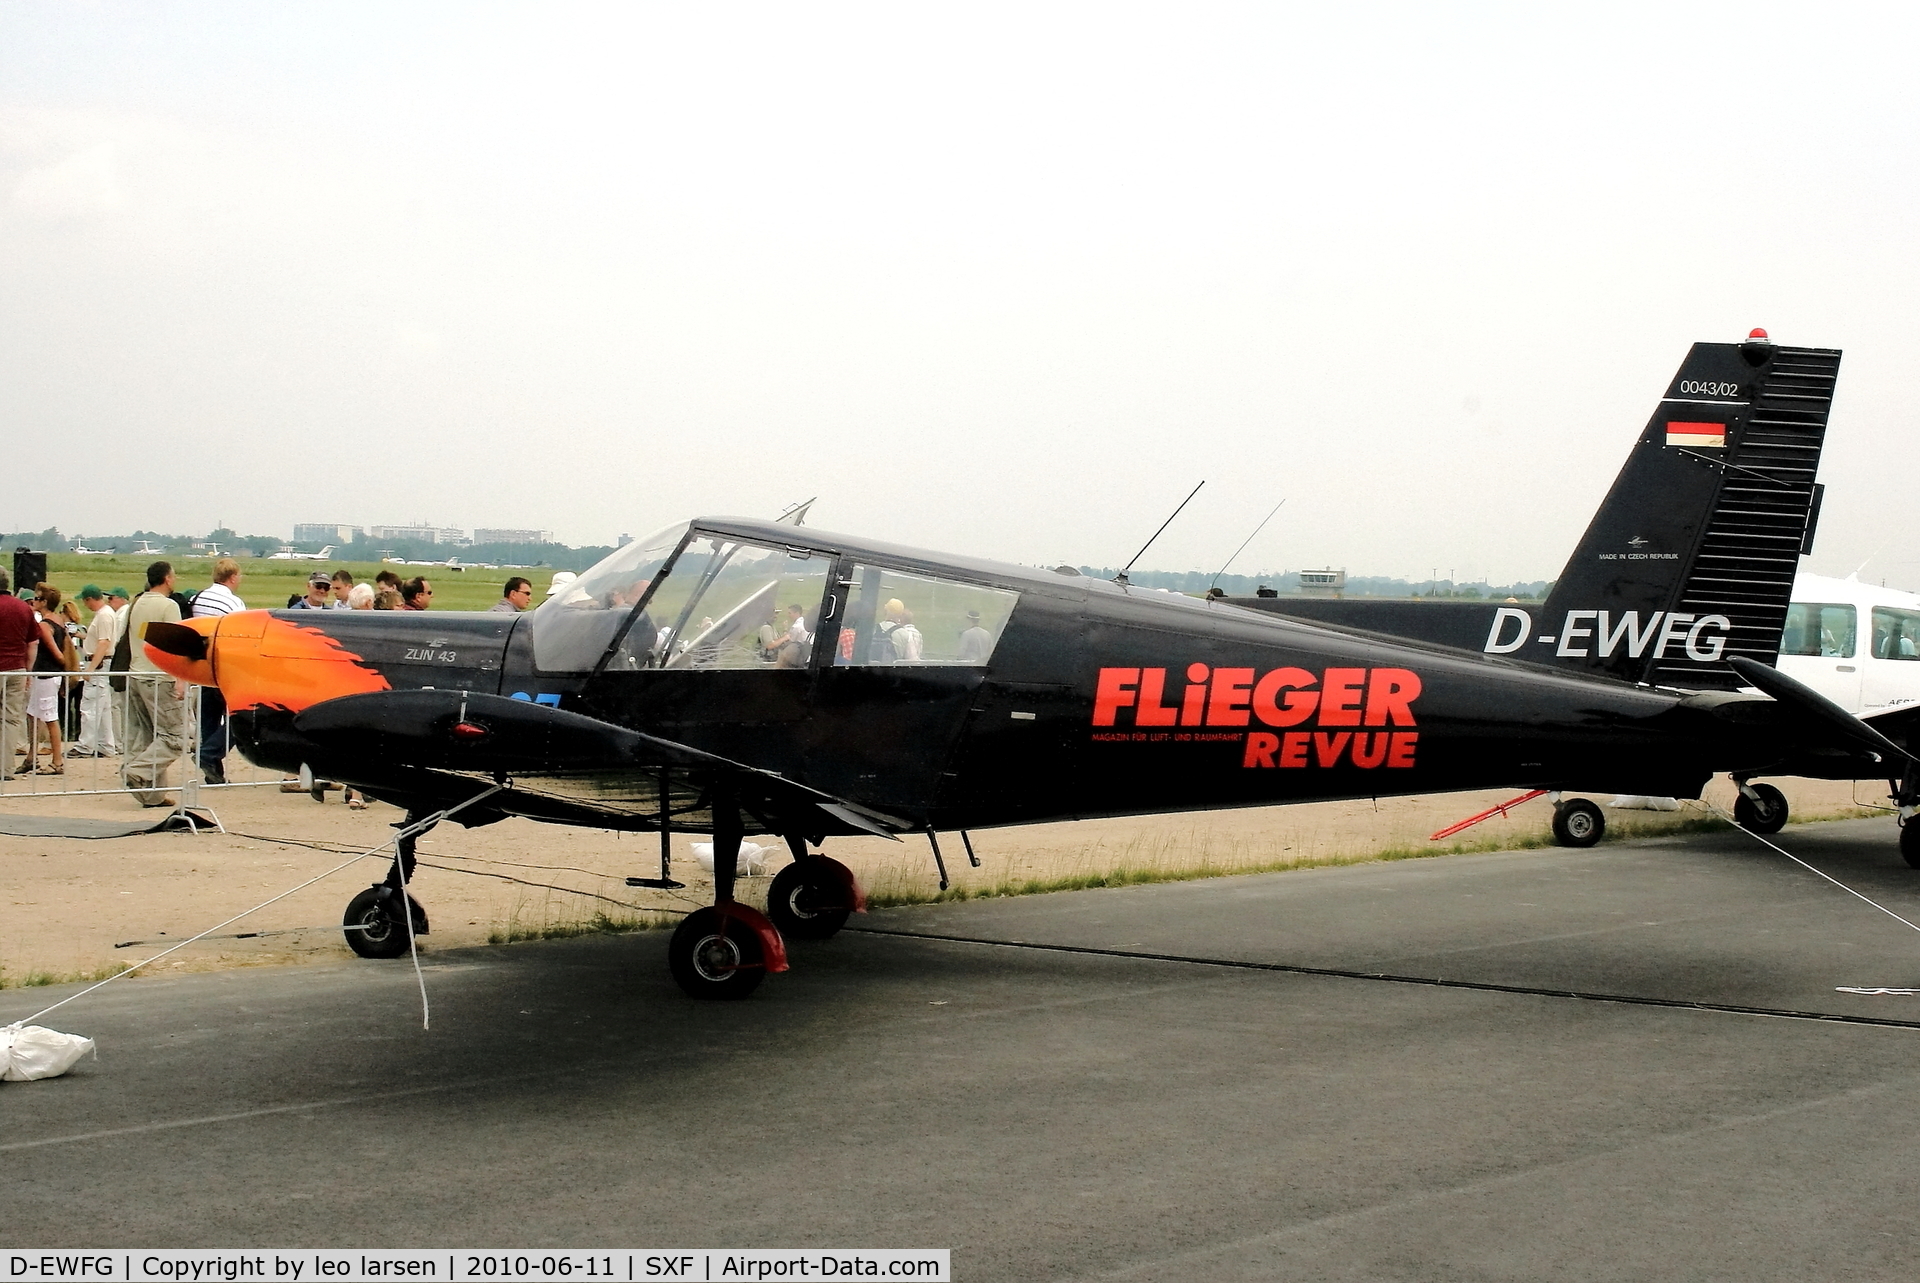 D-EWFG, 1974 Zlin Z-43 C/N 0043/02, Berlin Air Show 11.6.2010